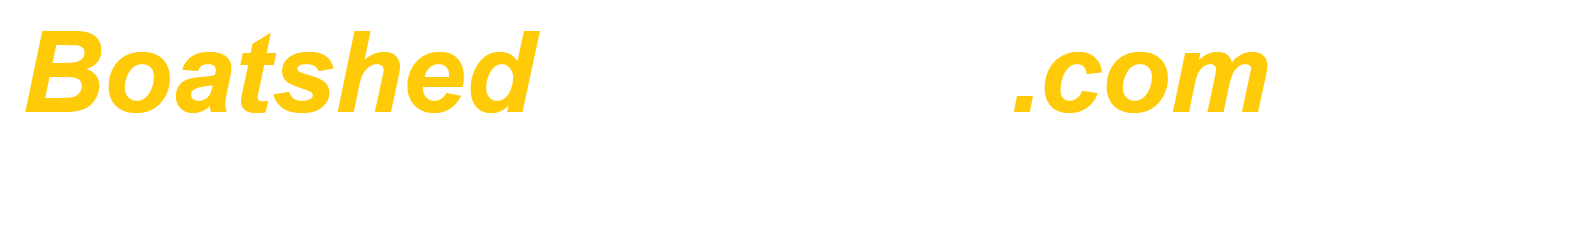 BoatshedLaRapita.com - International Yacht Brokers